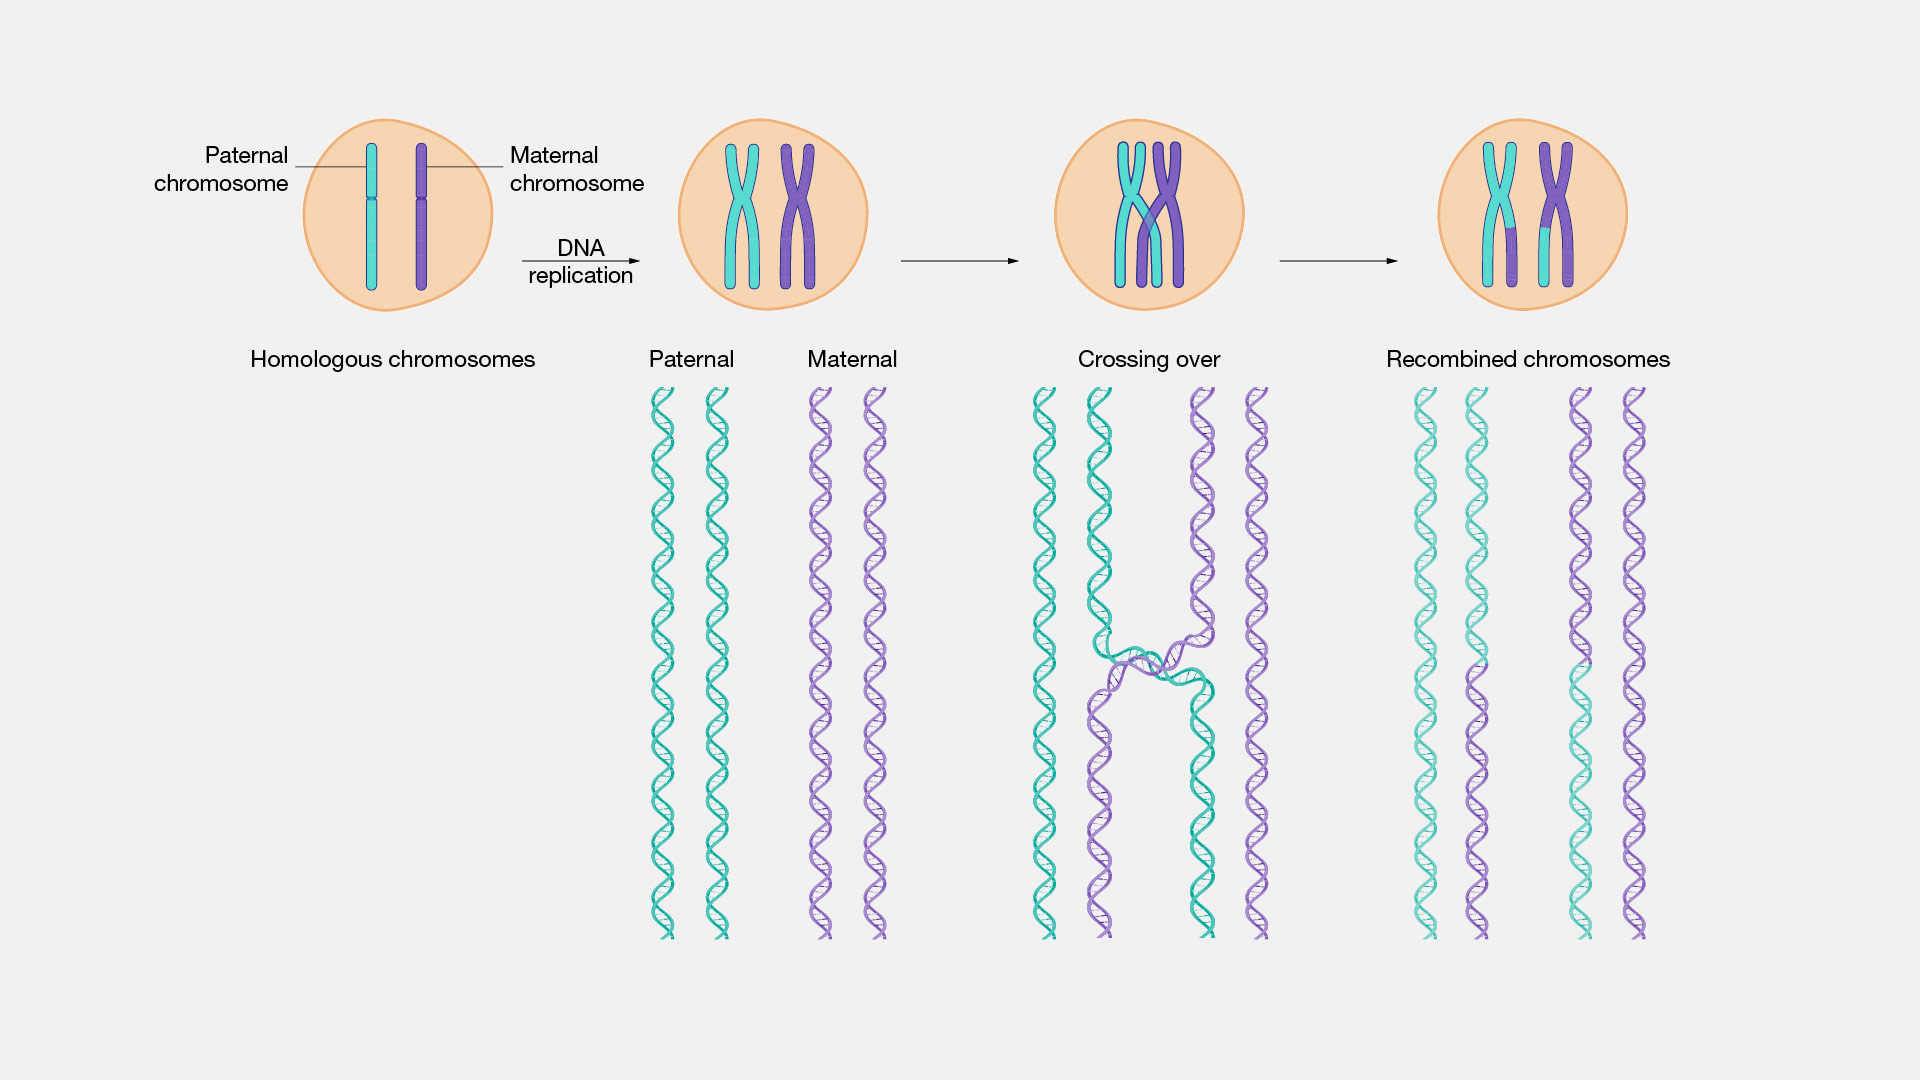 Recombination (from https://www.genome.gov/genetics-glossary/homologous-recombination)